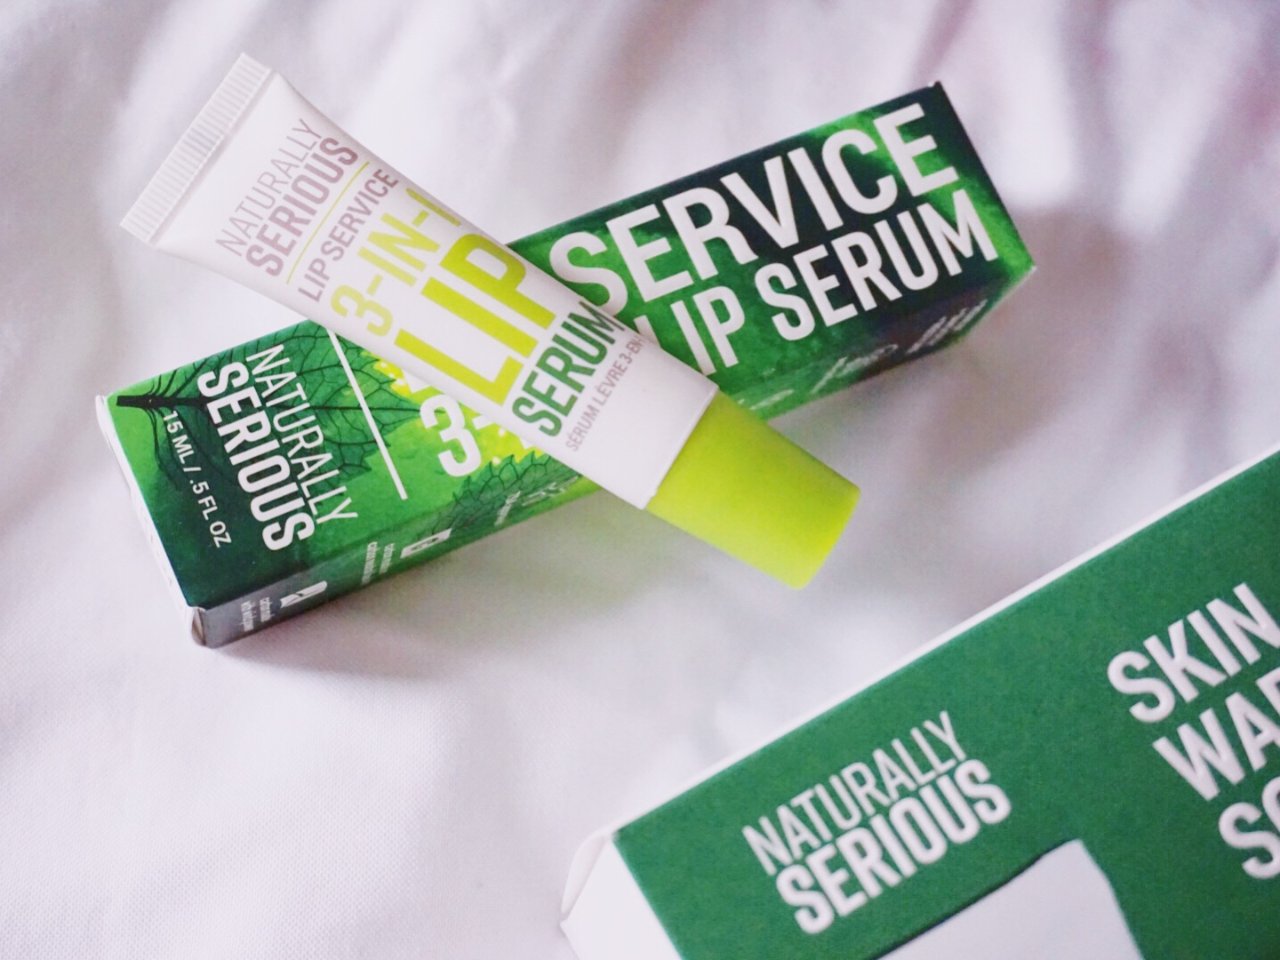 Naturally Serious,Lip service 3-in-1 lip serum